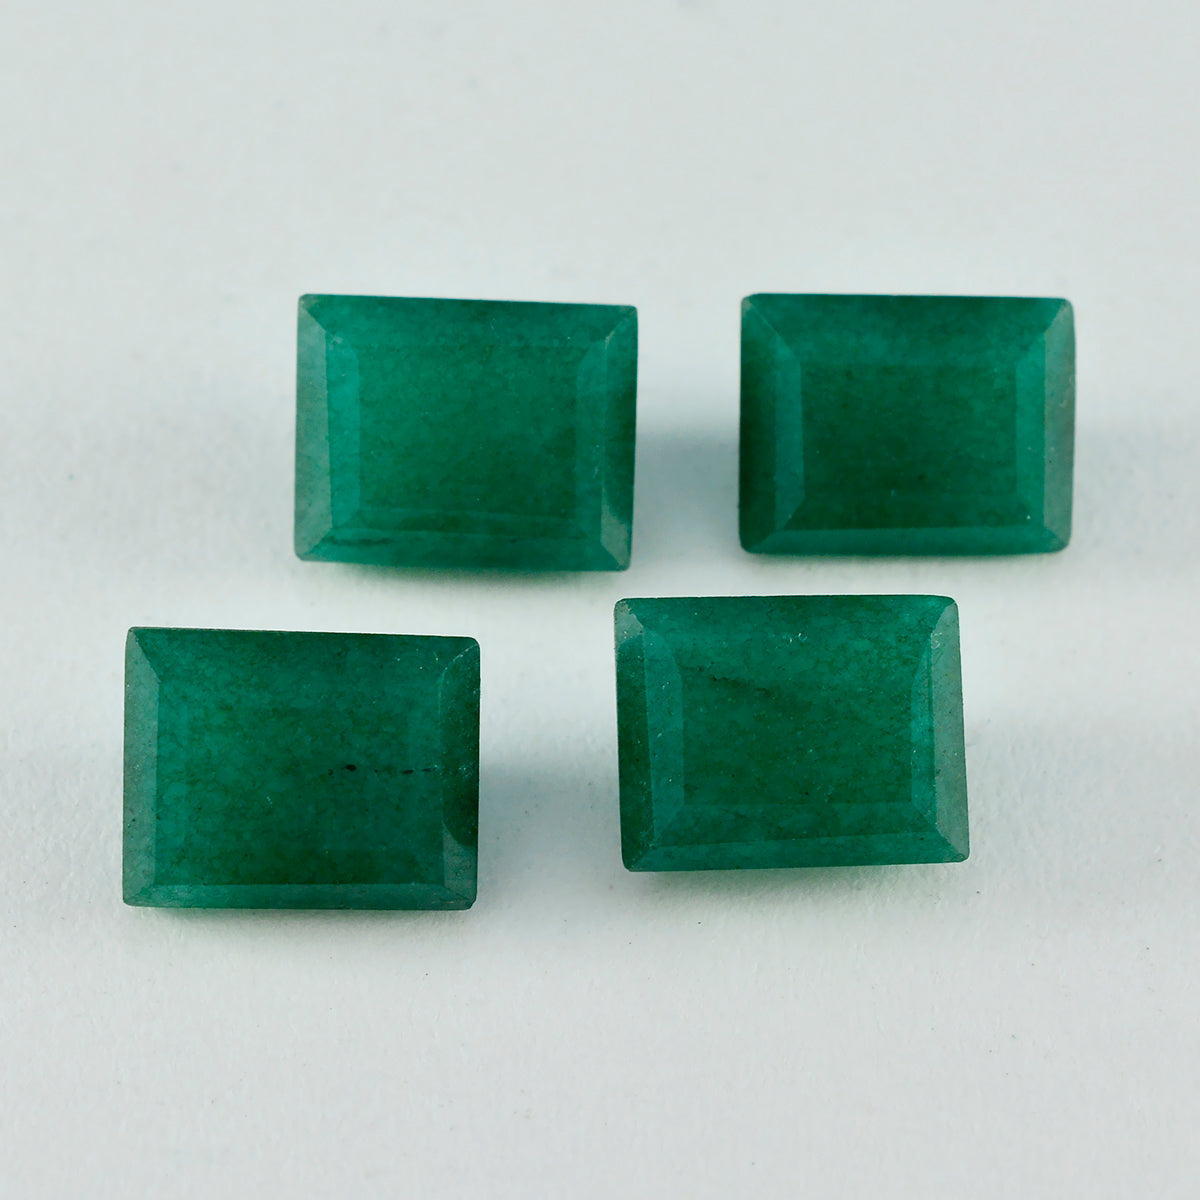 riyogems 1 pezzo di diaspro verde naturale sfaccettato 12x16 mm a forma ottagonale, gemma di qualità superba